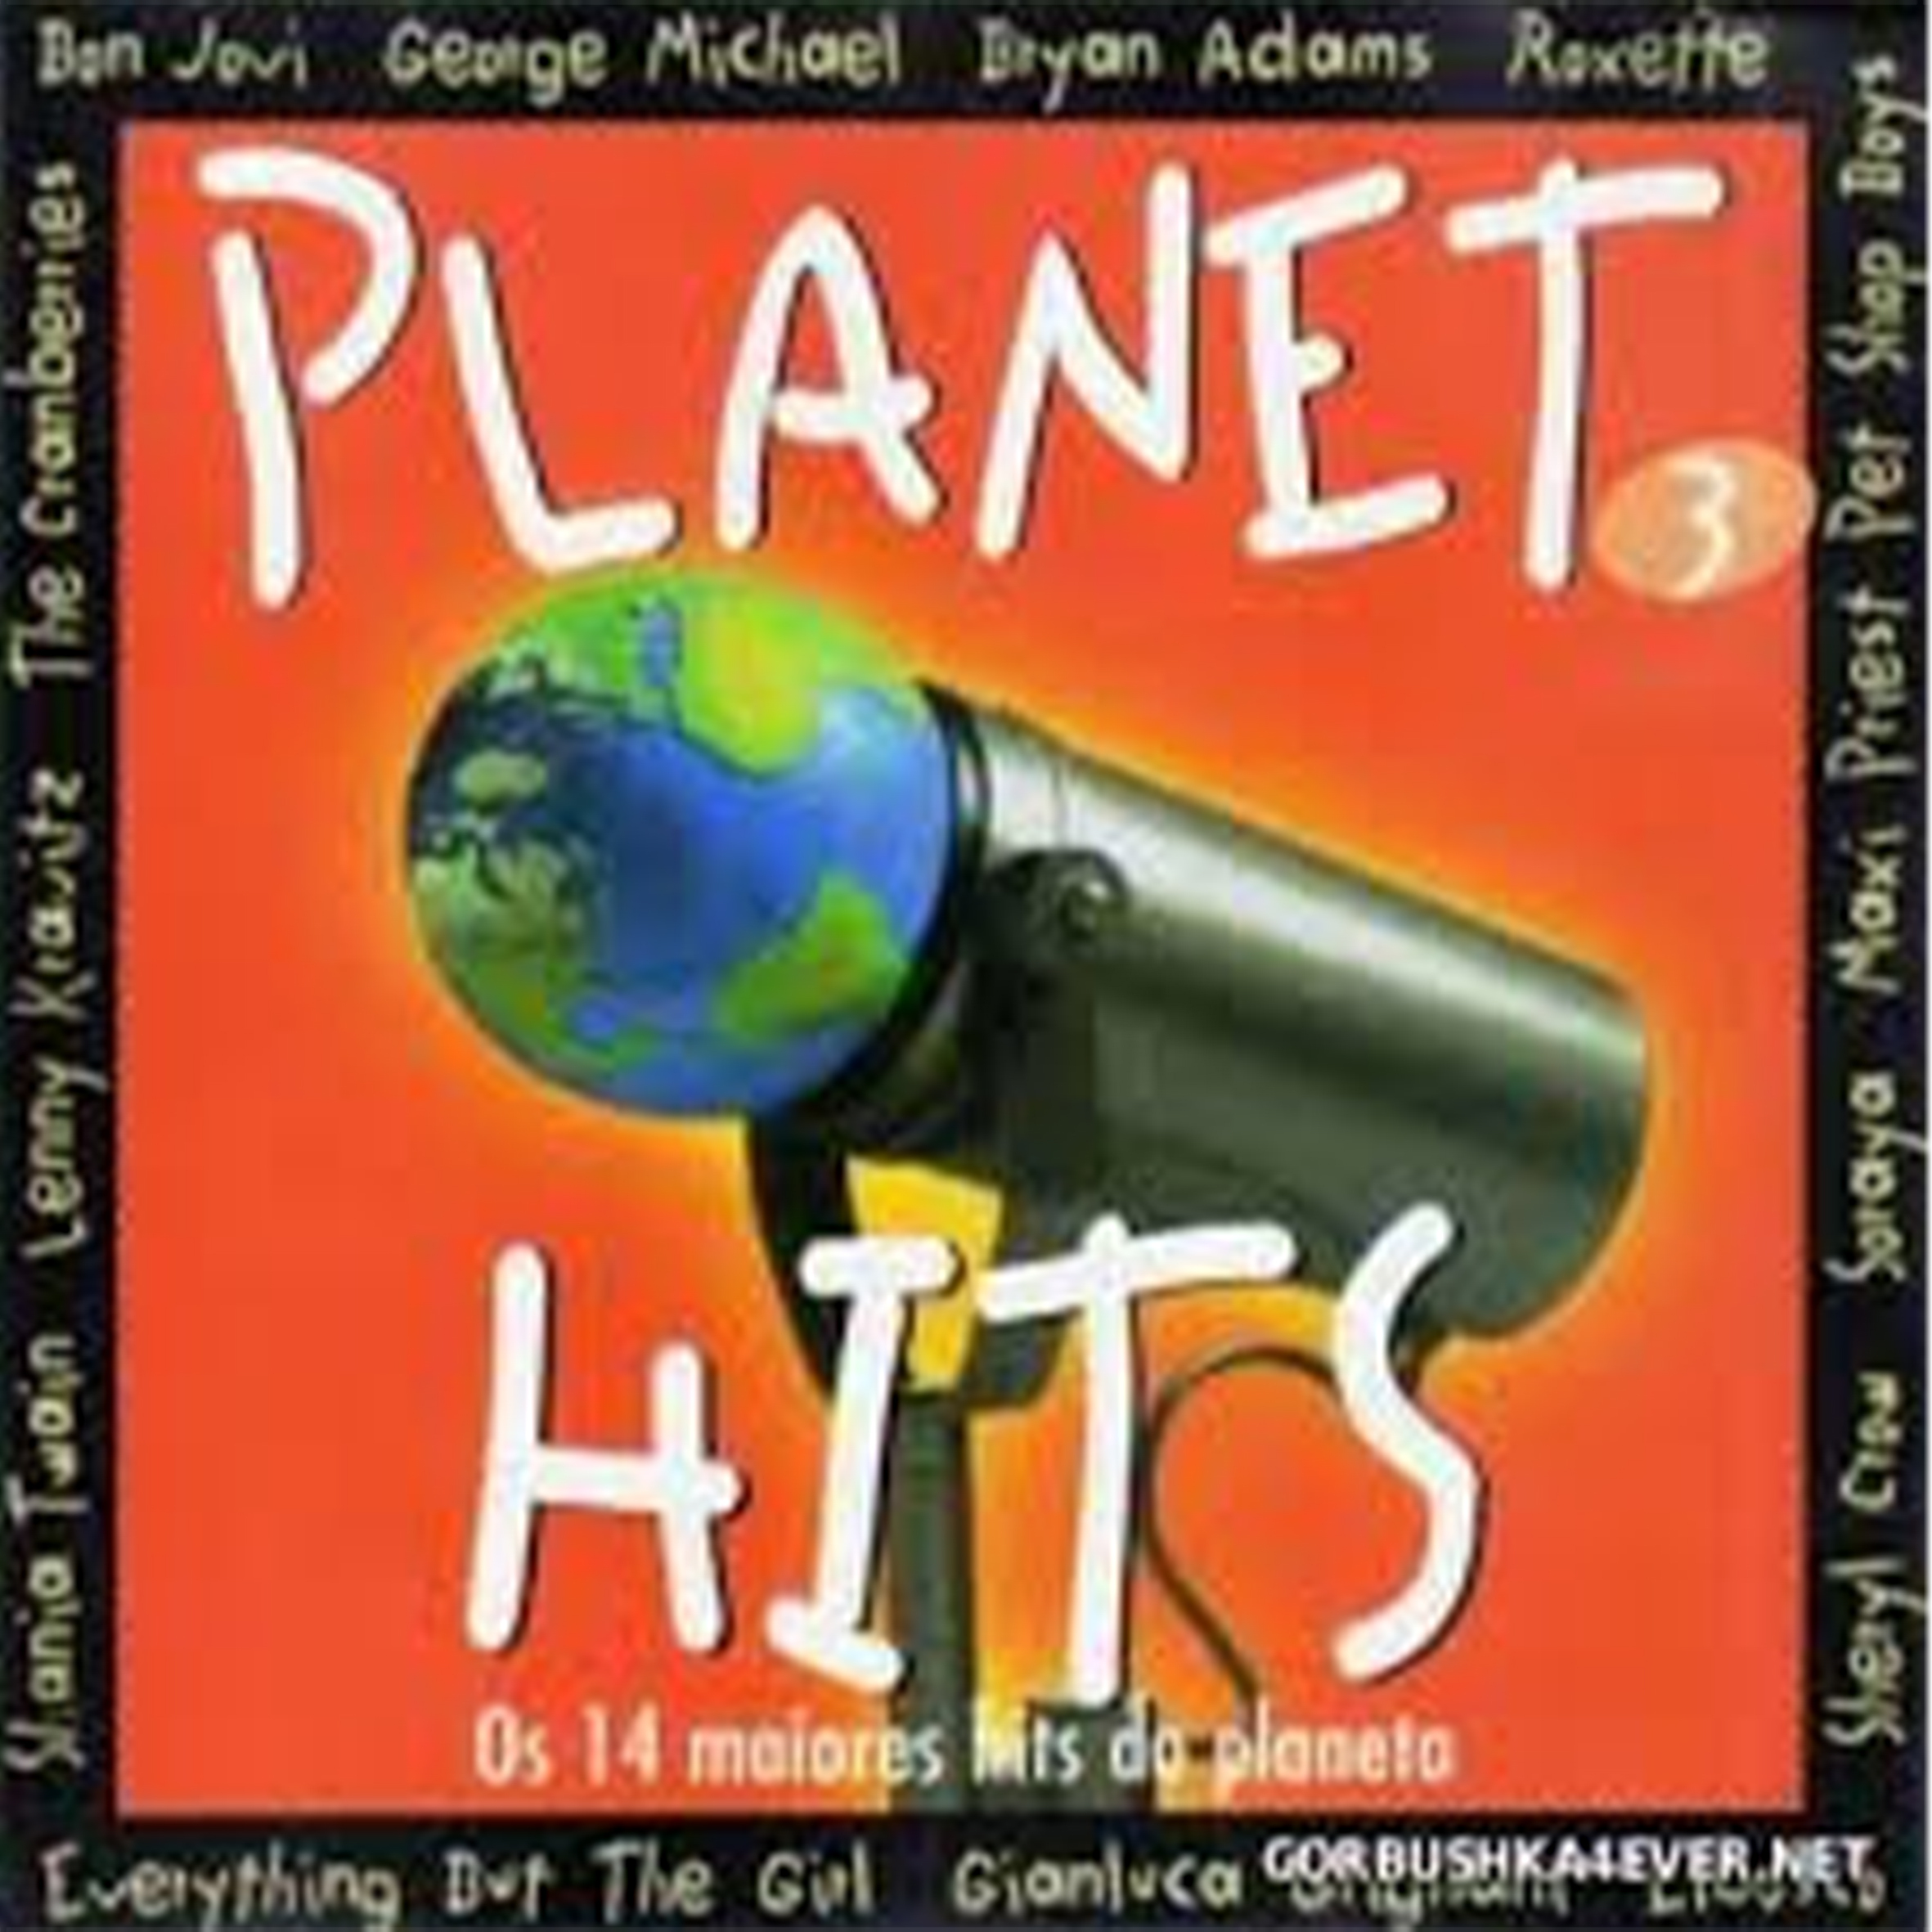 CD - Planet Hits 3